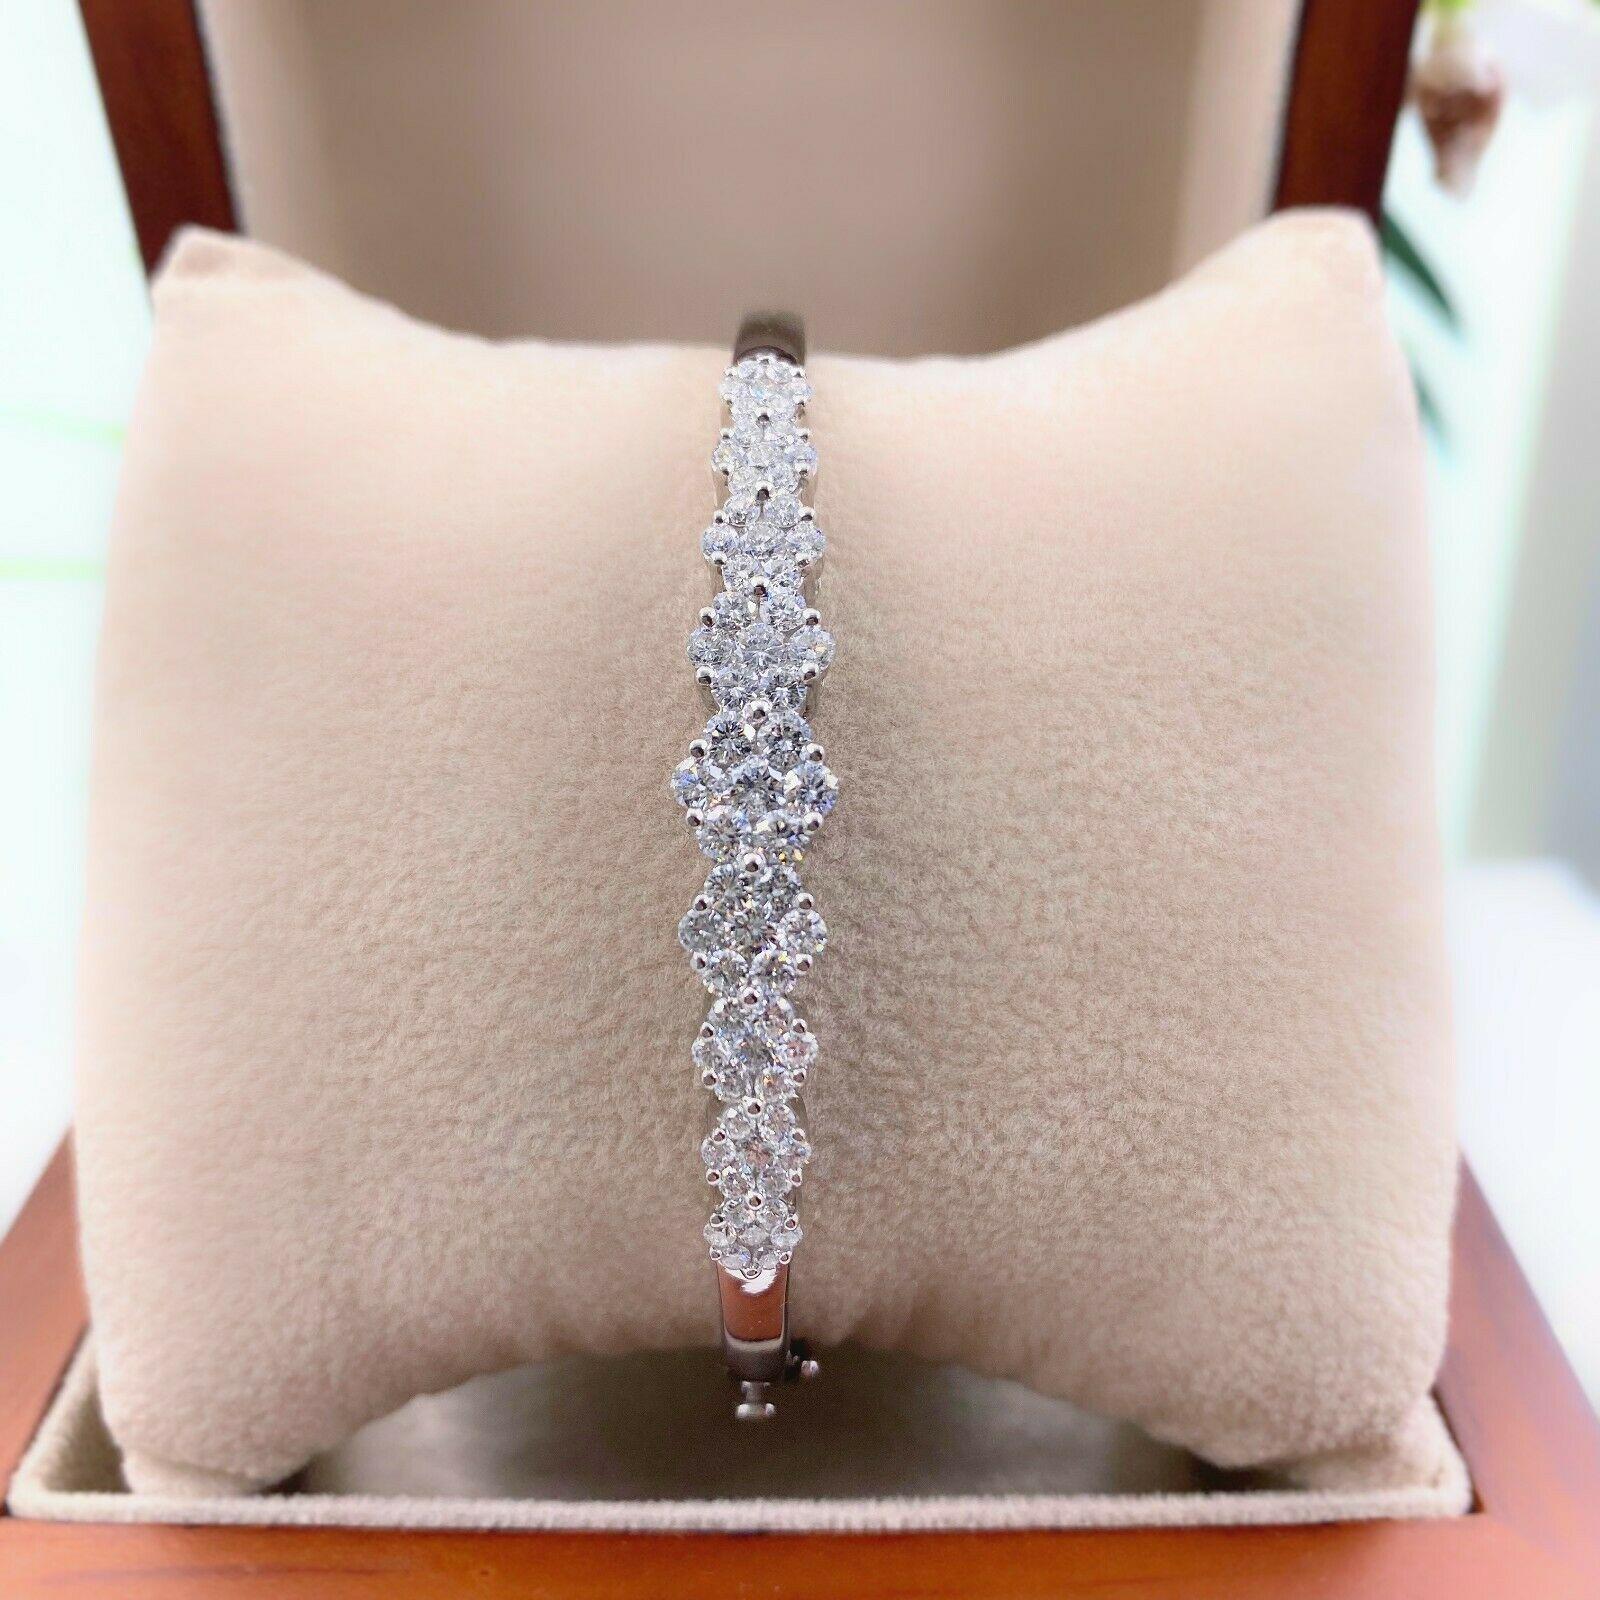 Diamond Flower Design Bangle Bracelet

Style:  Bangle

Metal:  14kt White Gold

Size / Measurements:  6.5'

TCW:  2.00 tcw

Main Diamond:  63 Round Brilliant Diamonds 

Color & Clarity:  F - G / SI1 - SI2

Hallmark:  14 kt

Includes:  Certified